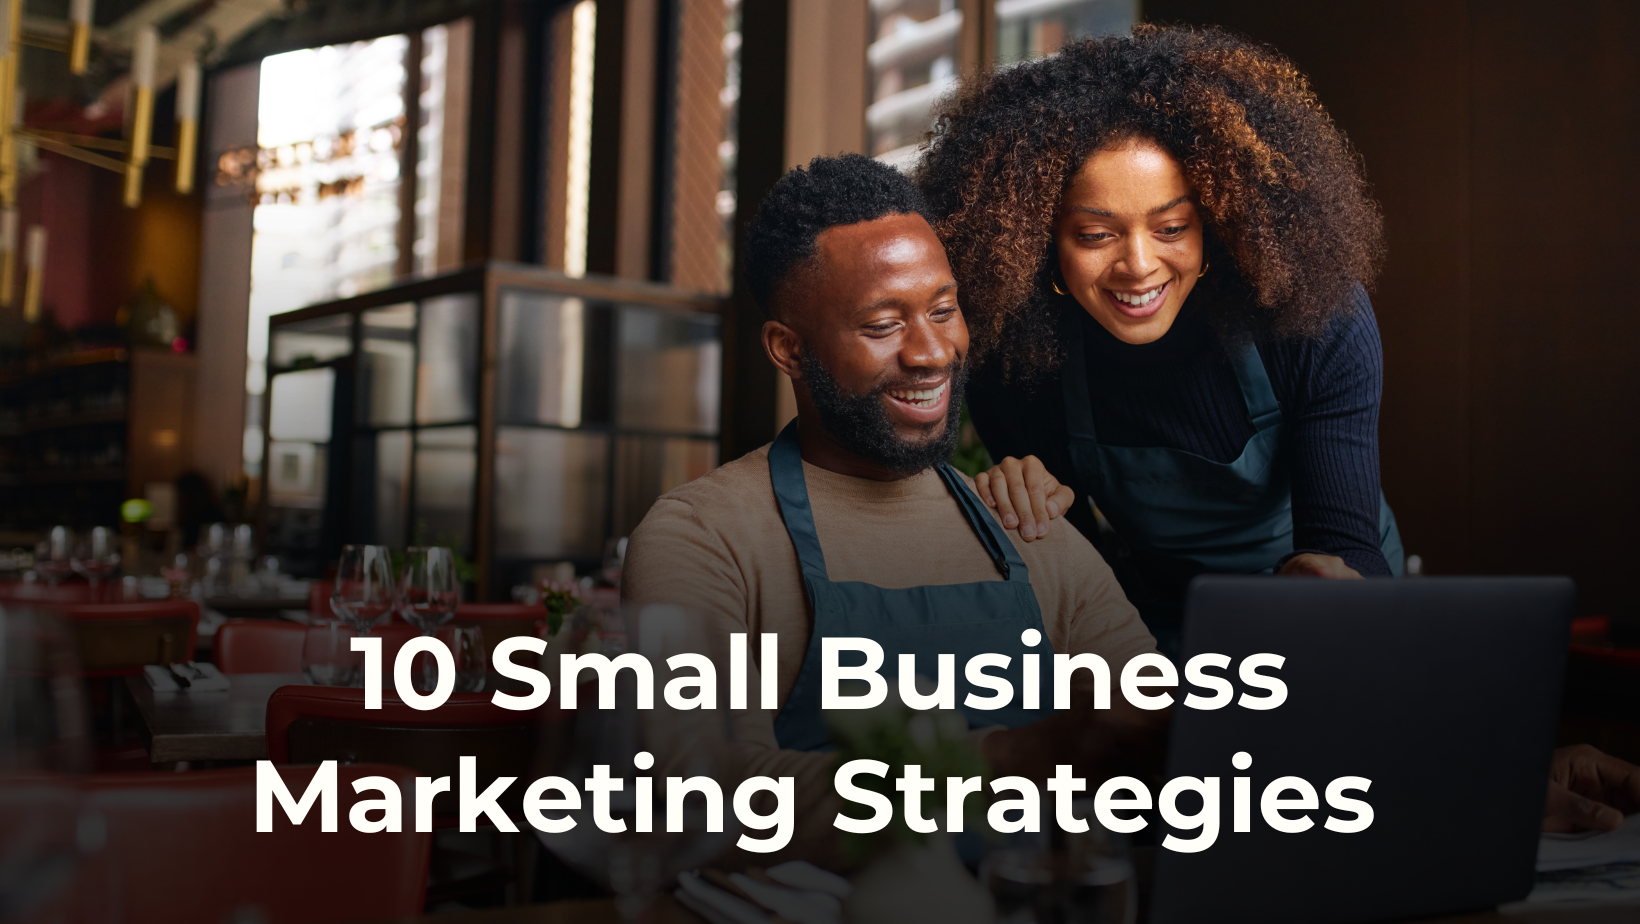 Business Marketing Strategies